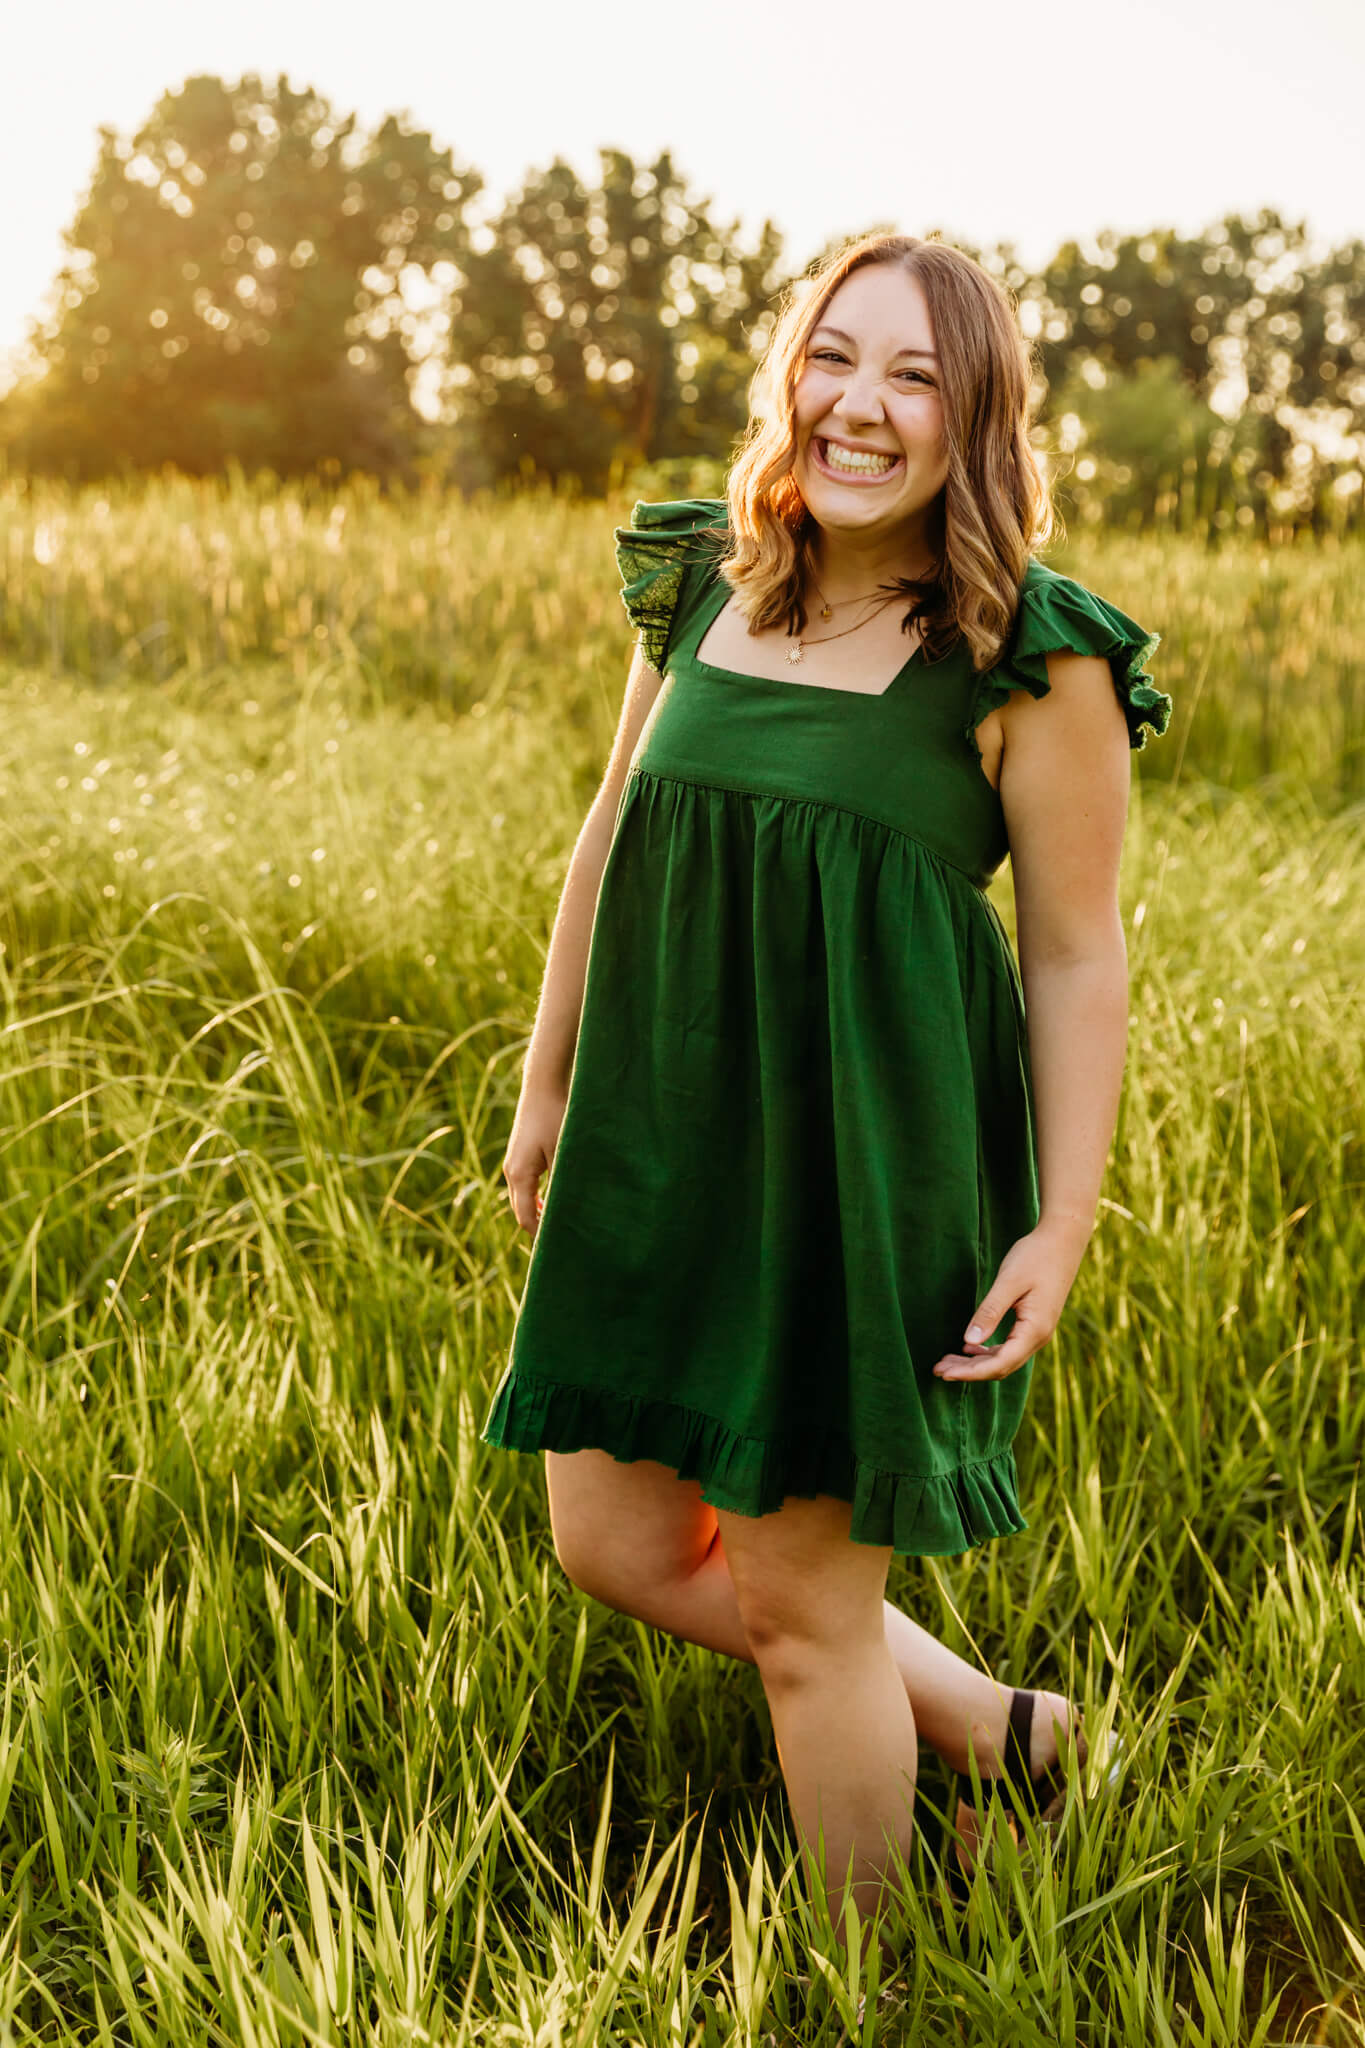 beautiful high school senior girl walking through a grassy field at sunset for senior photo session